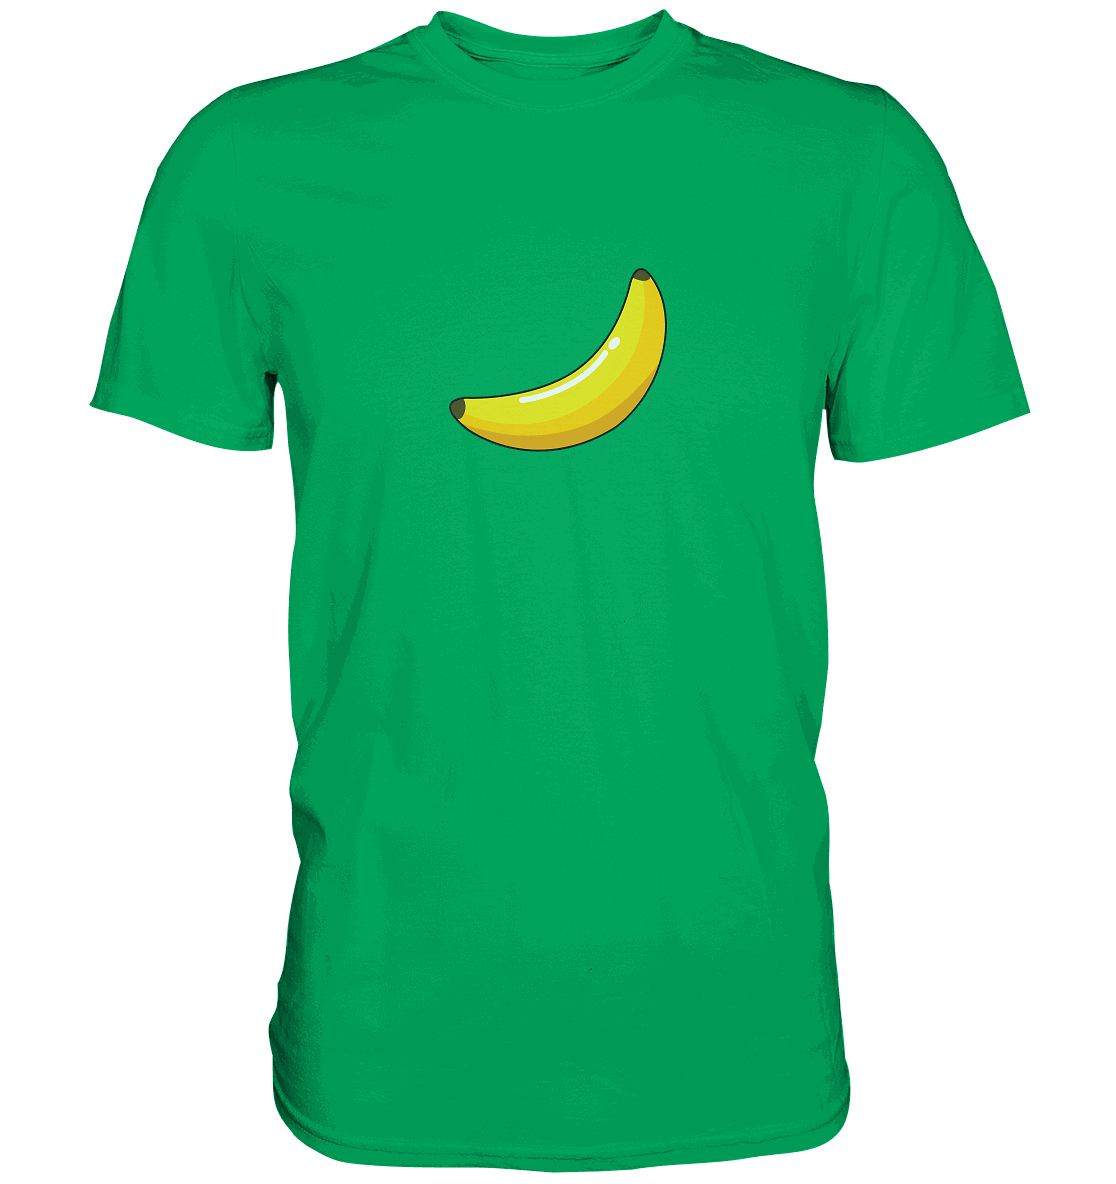 Fruit Shirt - Banana yellow